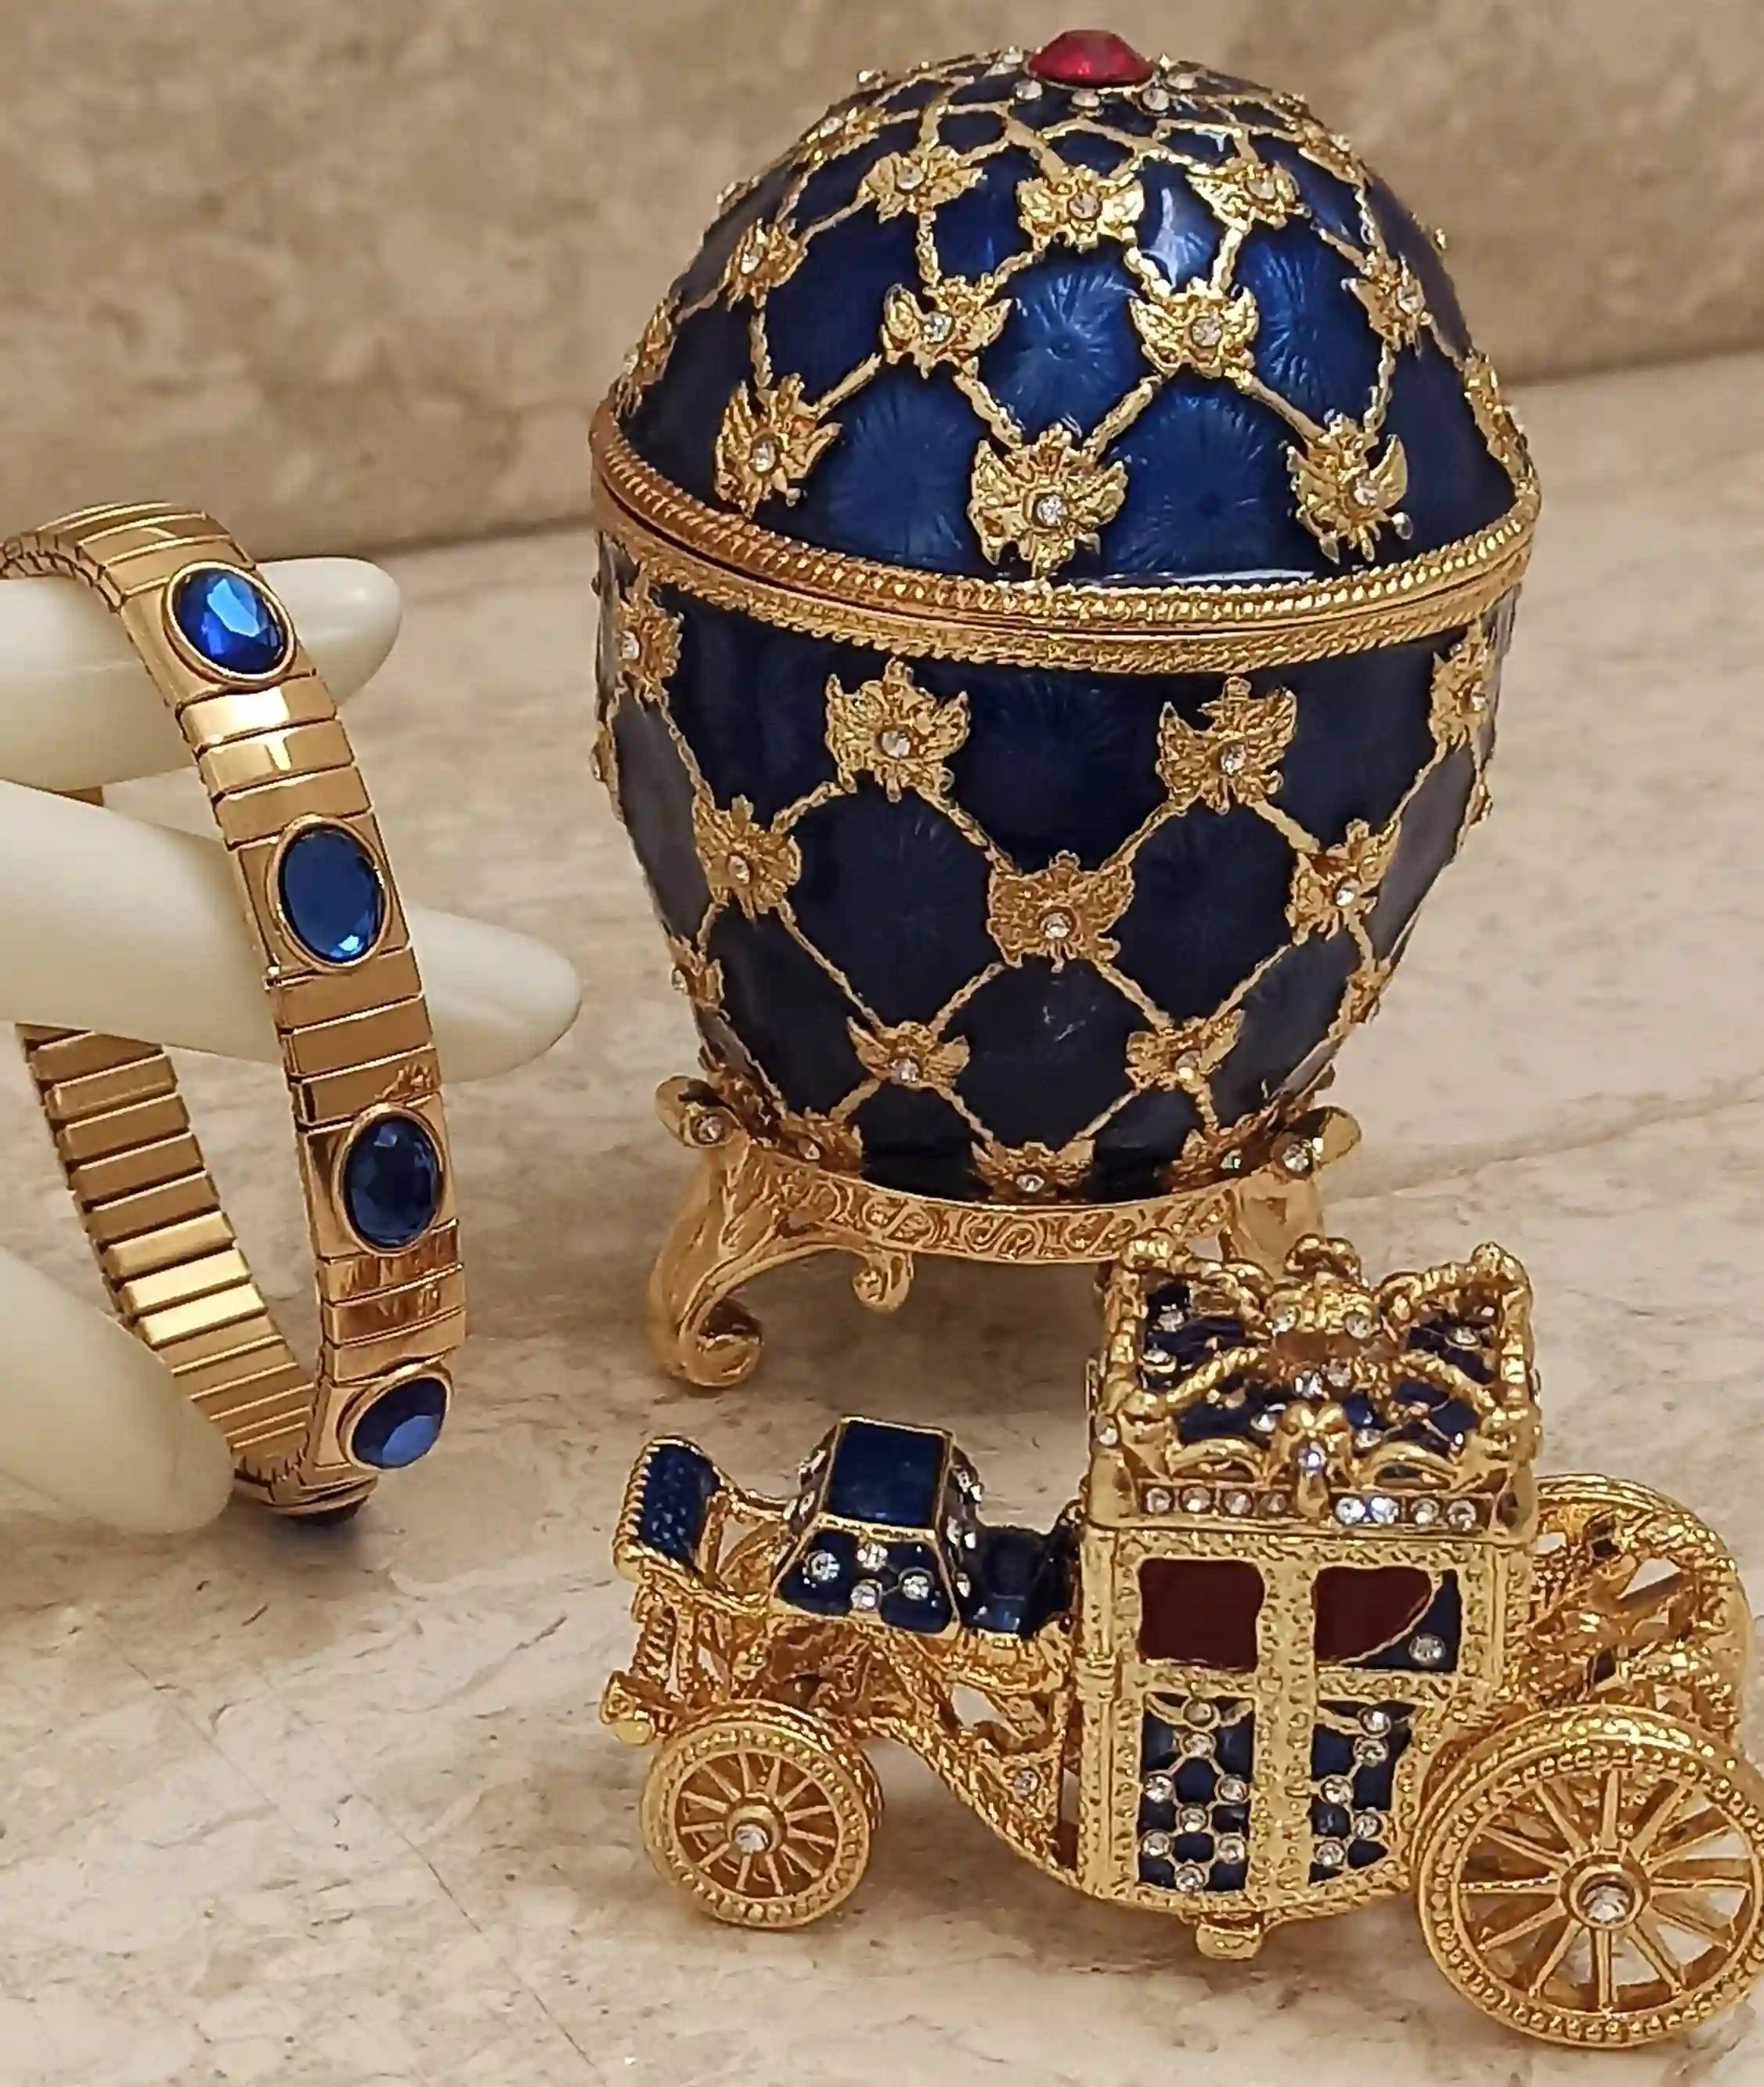 Queens Carriage Egg Faberge Ornament Jewelry Box FAbrege 24k GOLD 10ct Austrian Crystal Sapphire Bracelet Faberge Egg Designer pierrelorren 